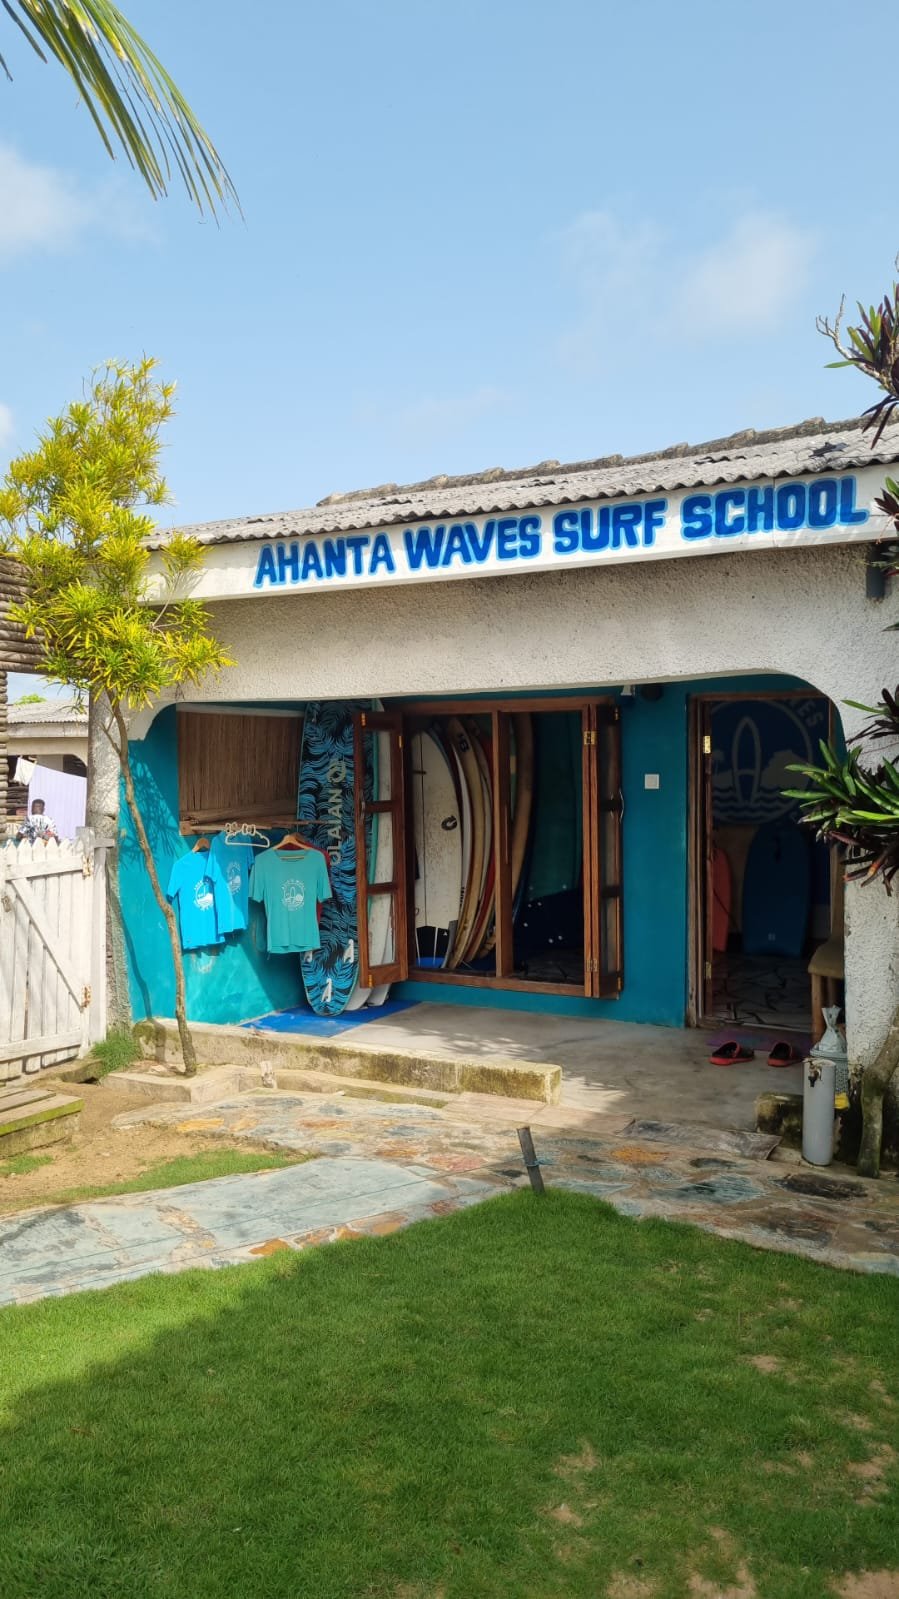 Surf School front.jpg